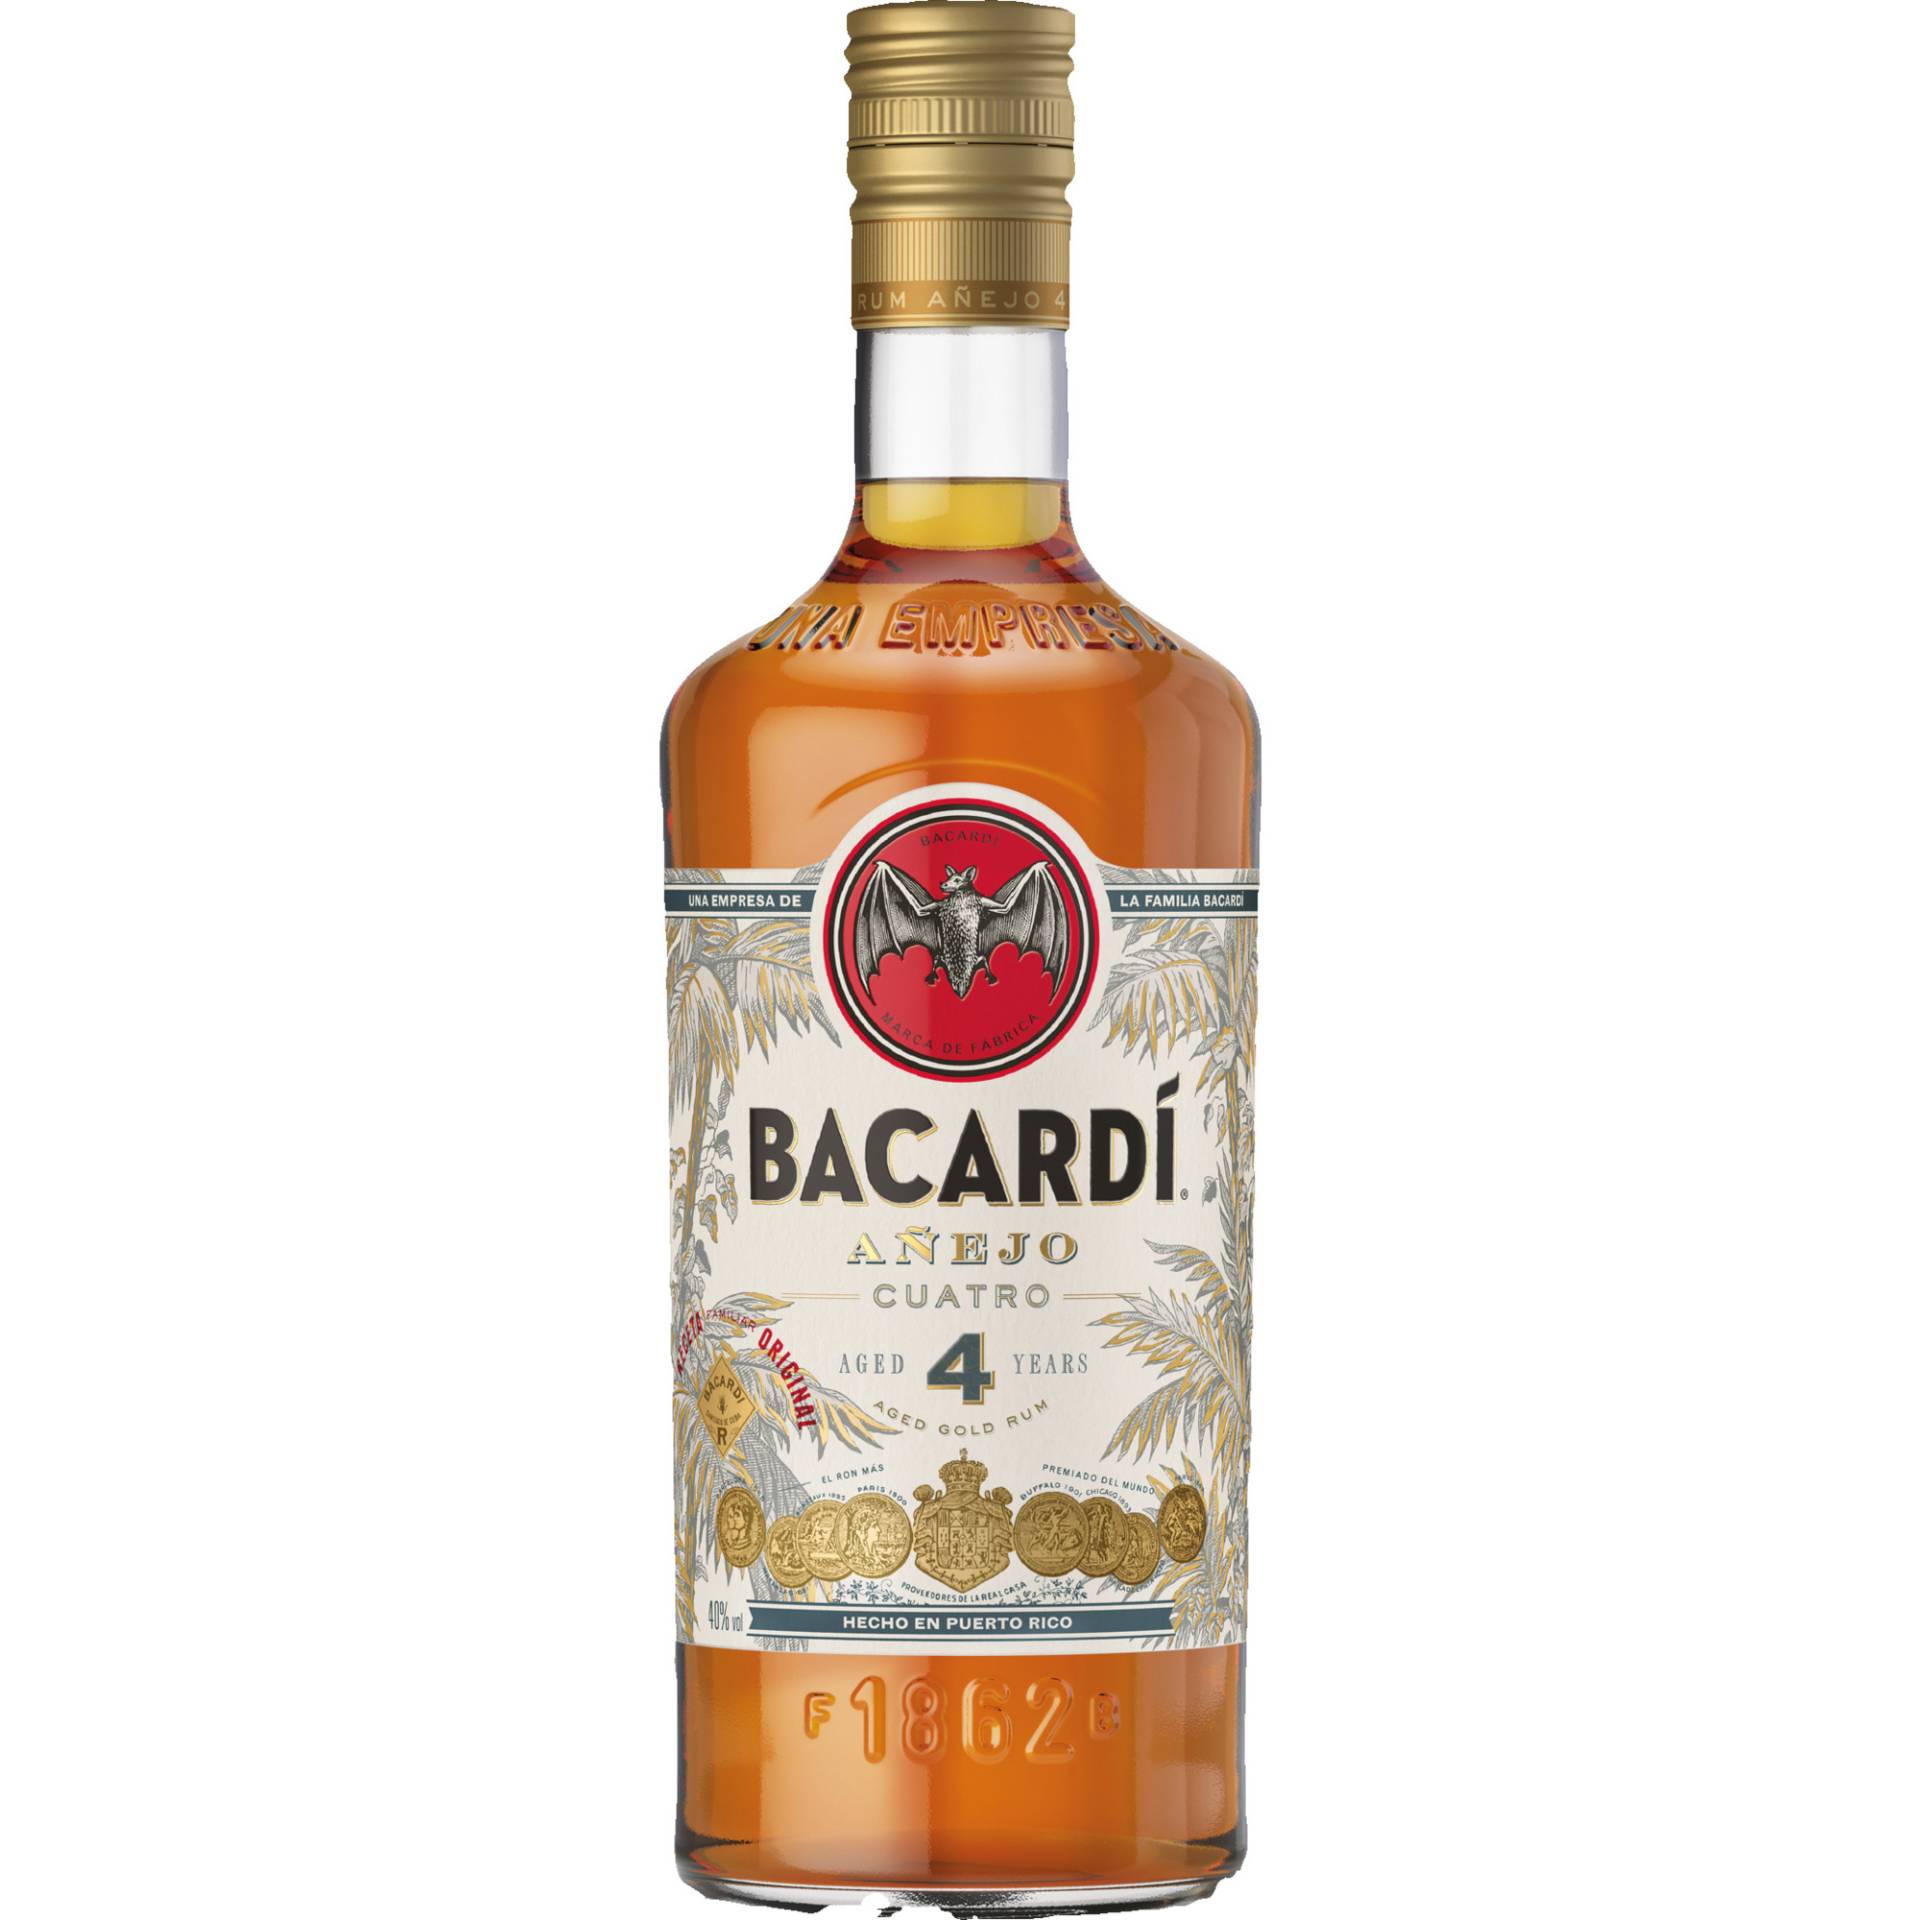 Bacardi Anejo Cuatro, 0,7l, 40% Vol., Rum, Spirituosen von Casa Bacardi , PR-165 , 00949 Catano, Puerto Rico / BACARDI GmbH , Hindenburgstr. 49 , D-22297 Hamburg